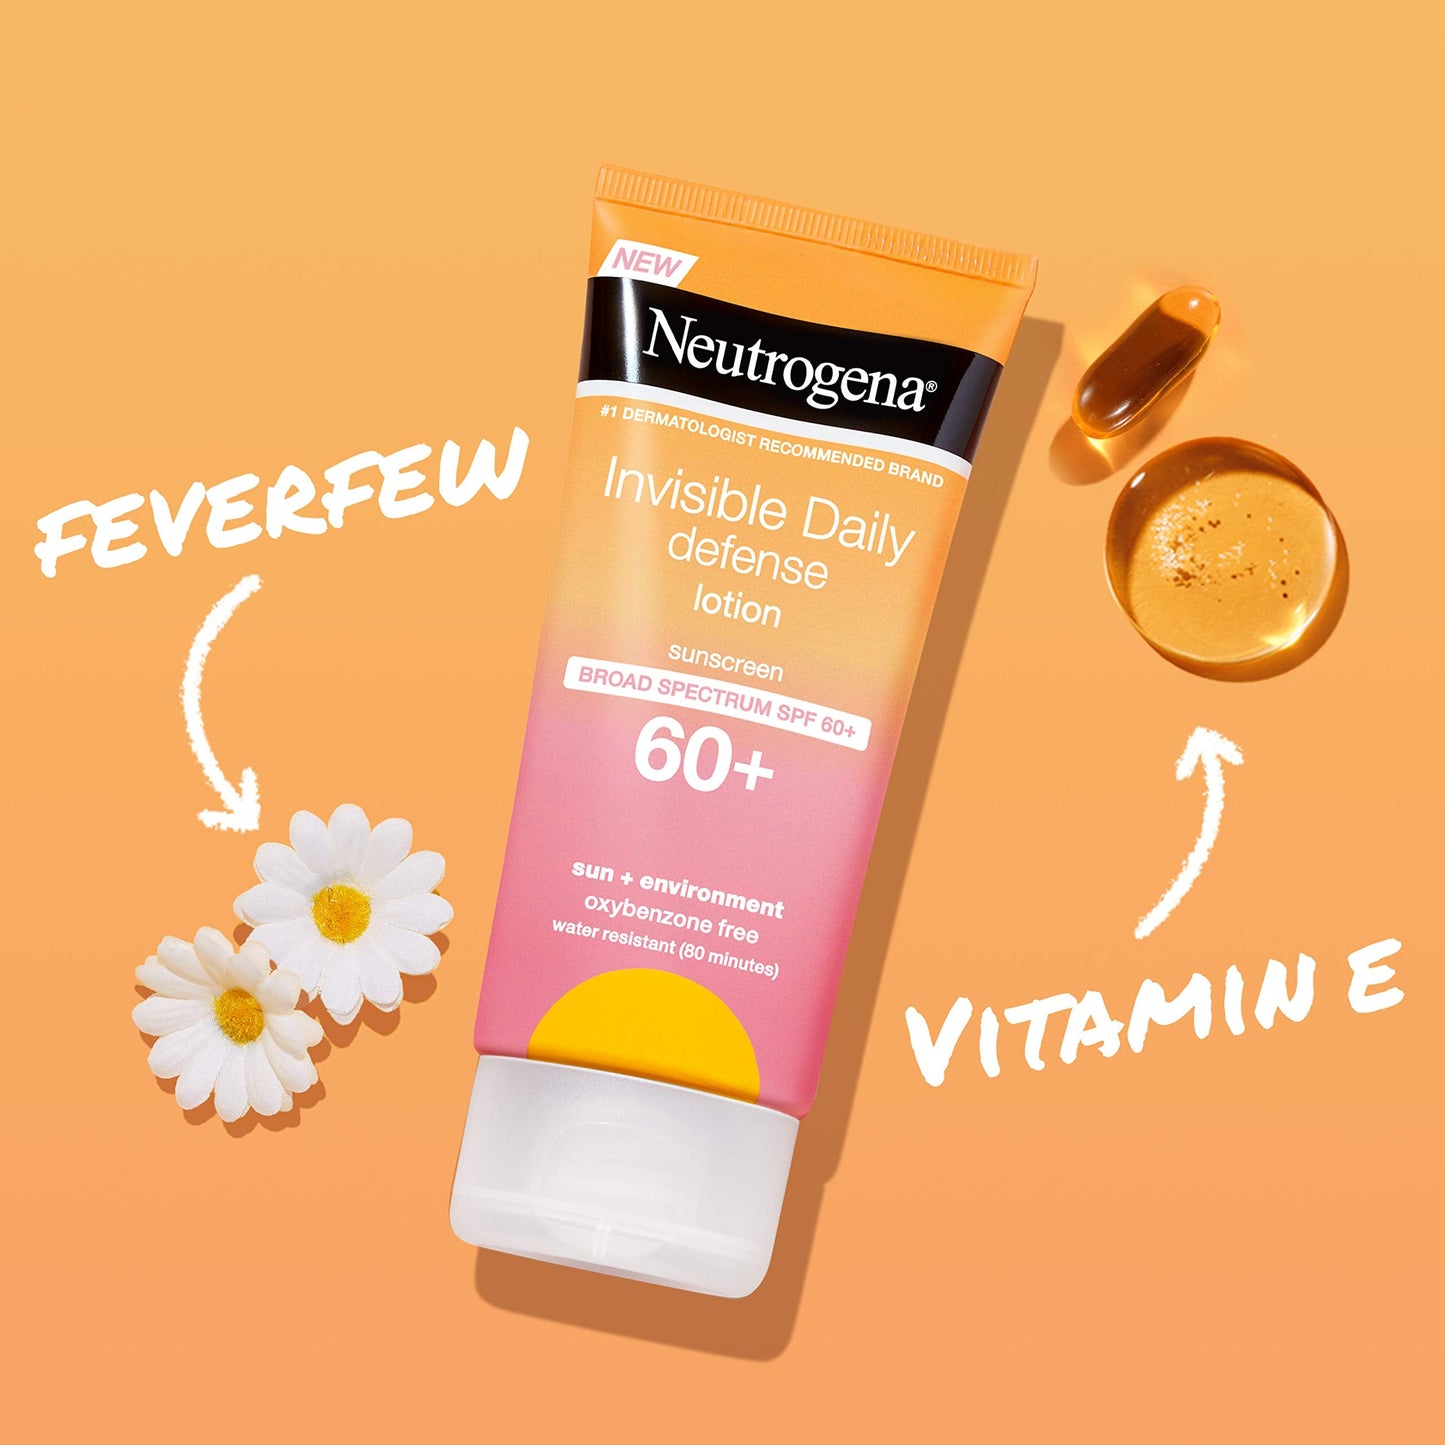 Neutrogena invisible daily defense spf 60+ sunscreen - Buy Now Pakistan